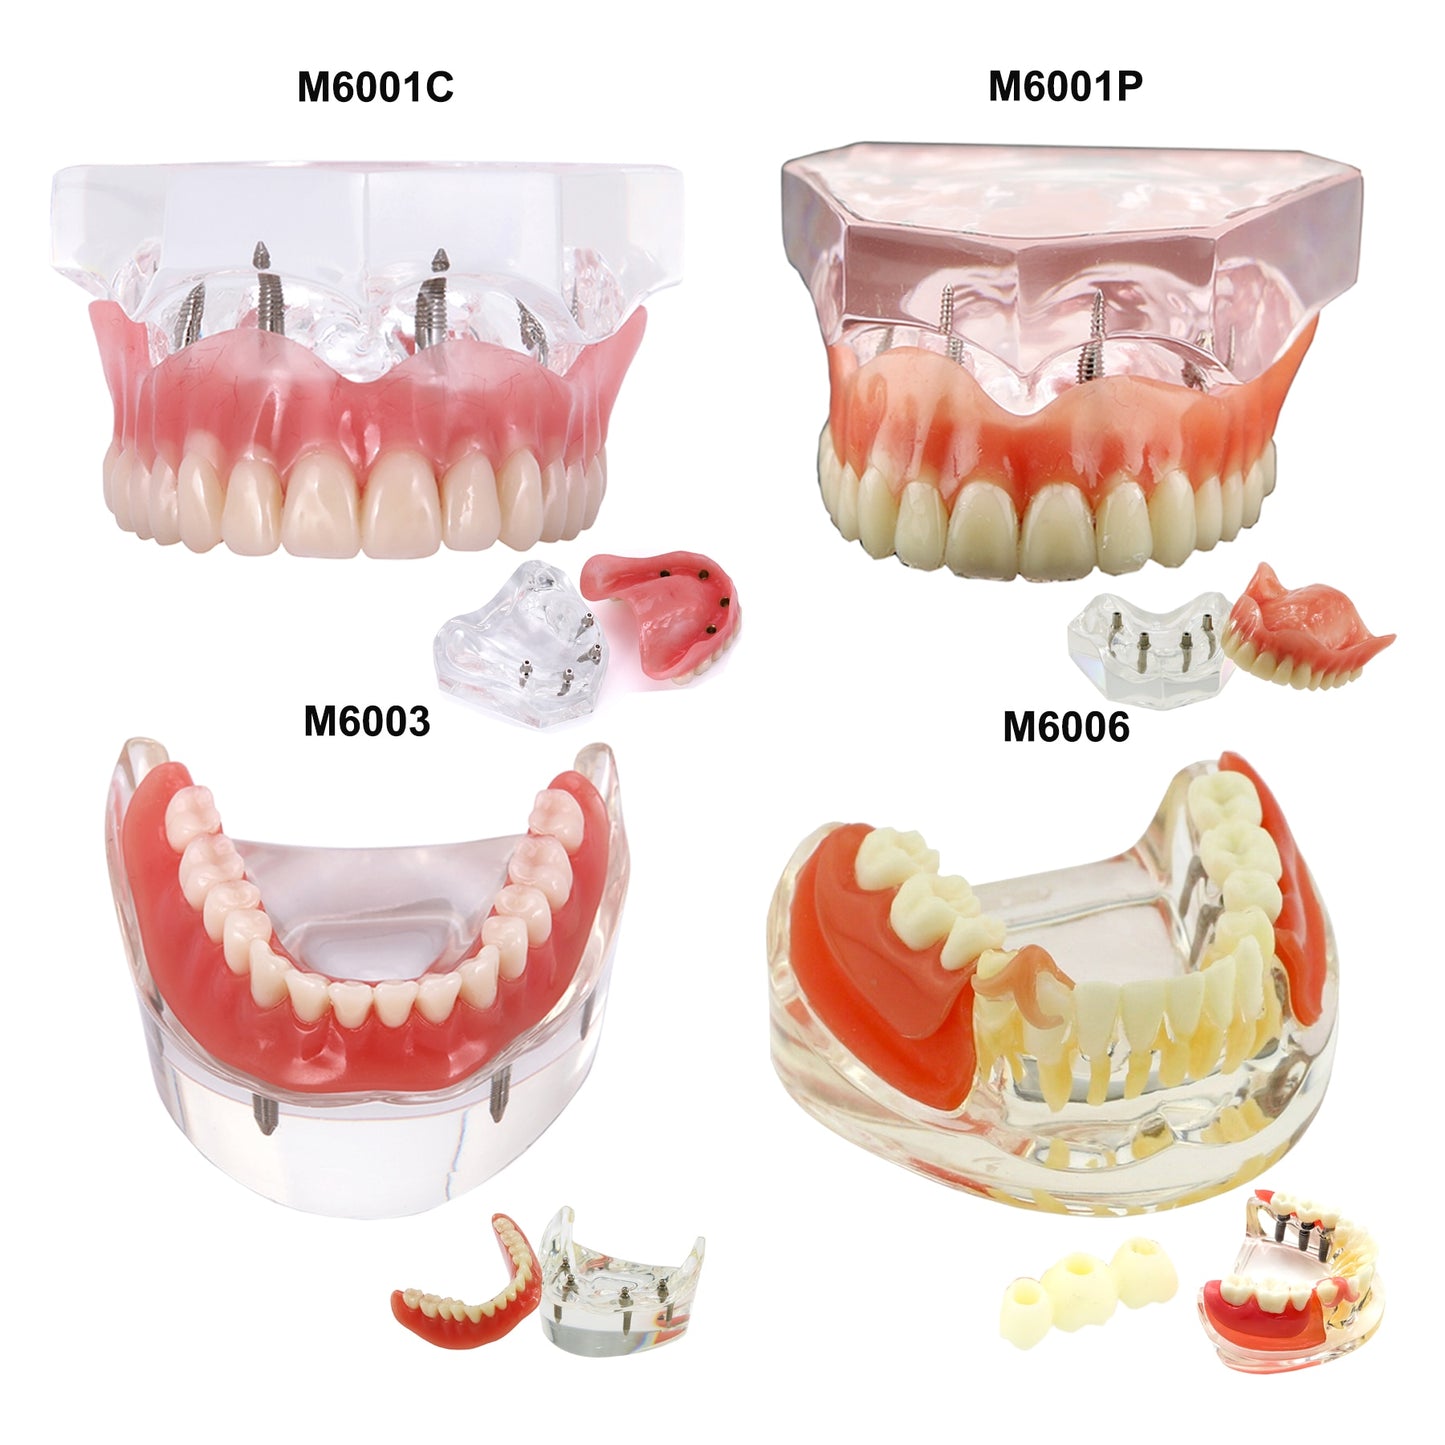 Teeth models / typodonts